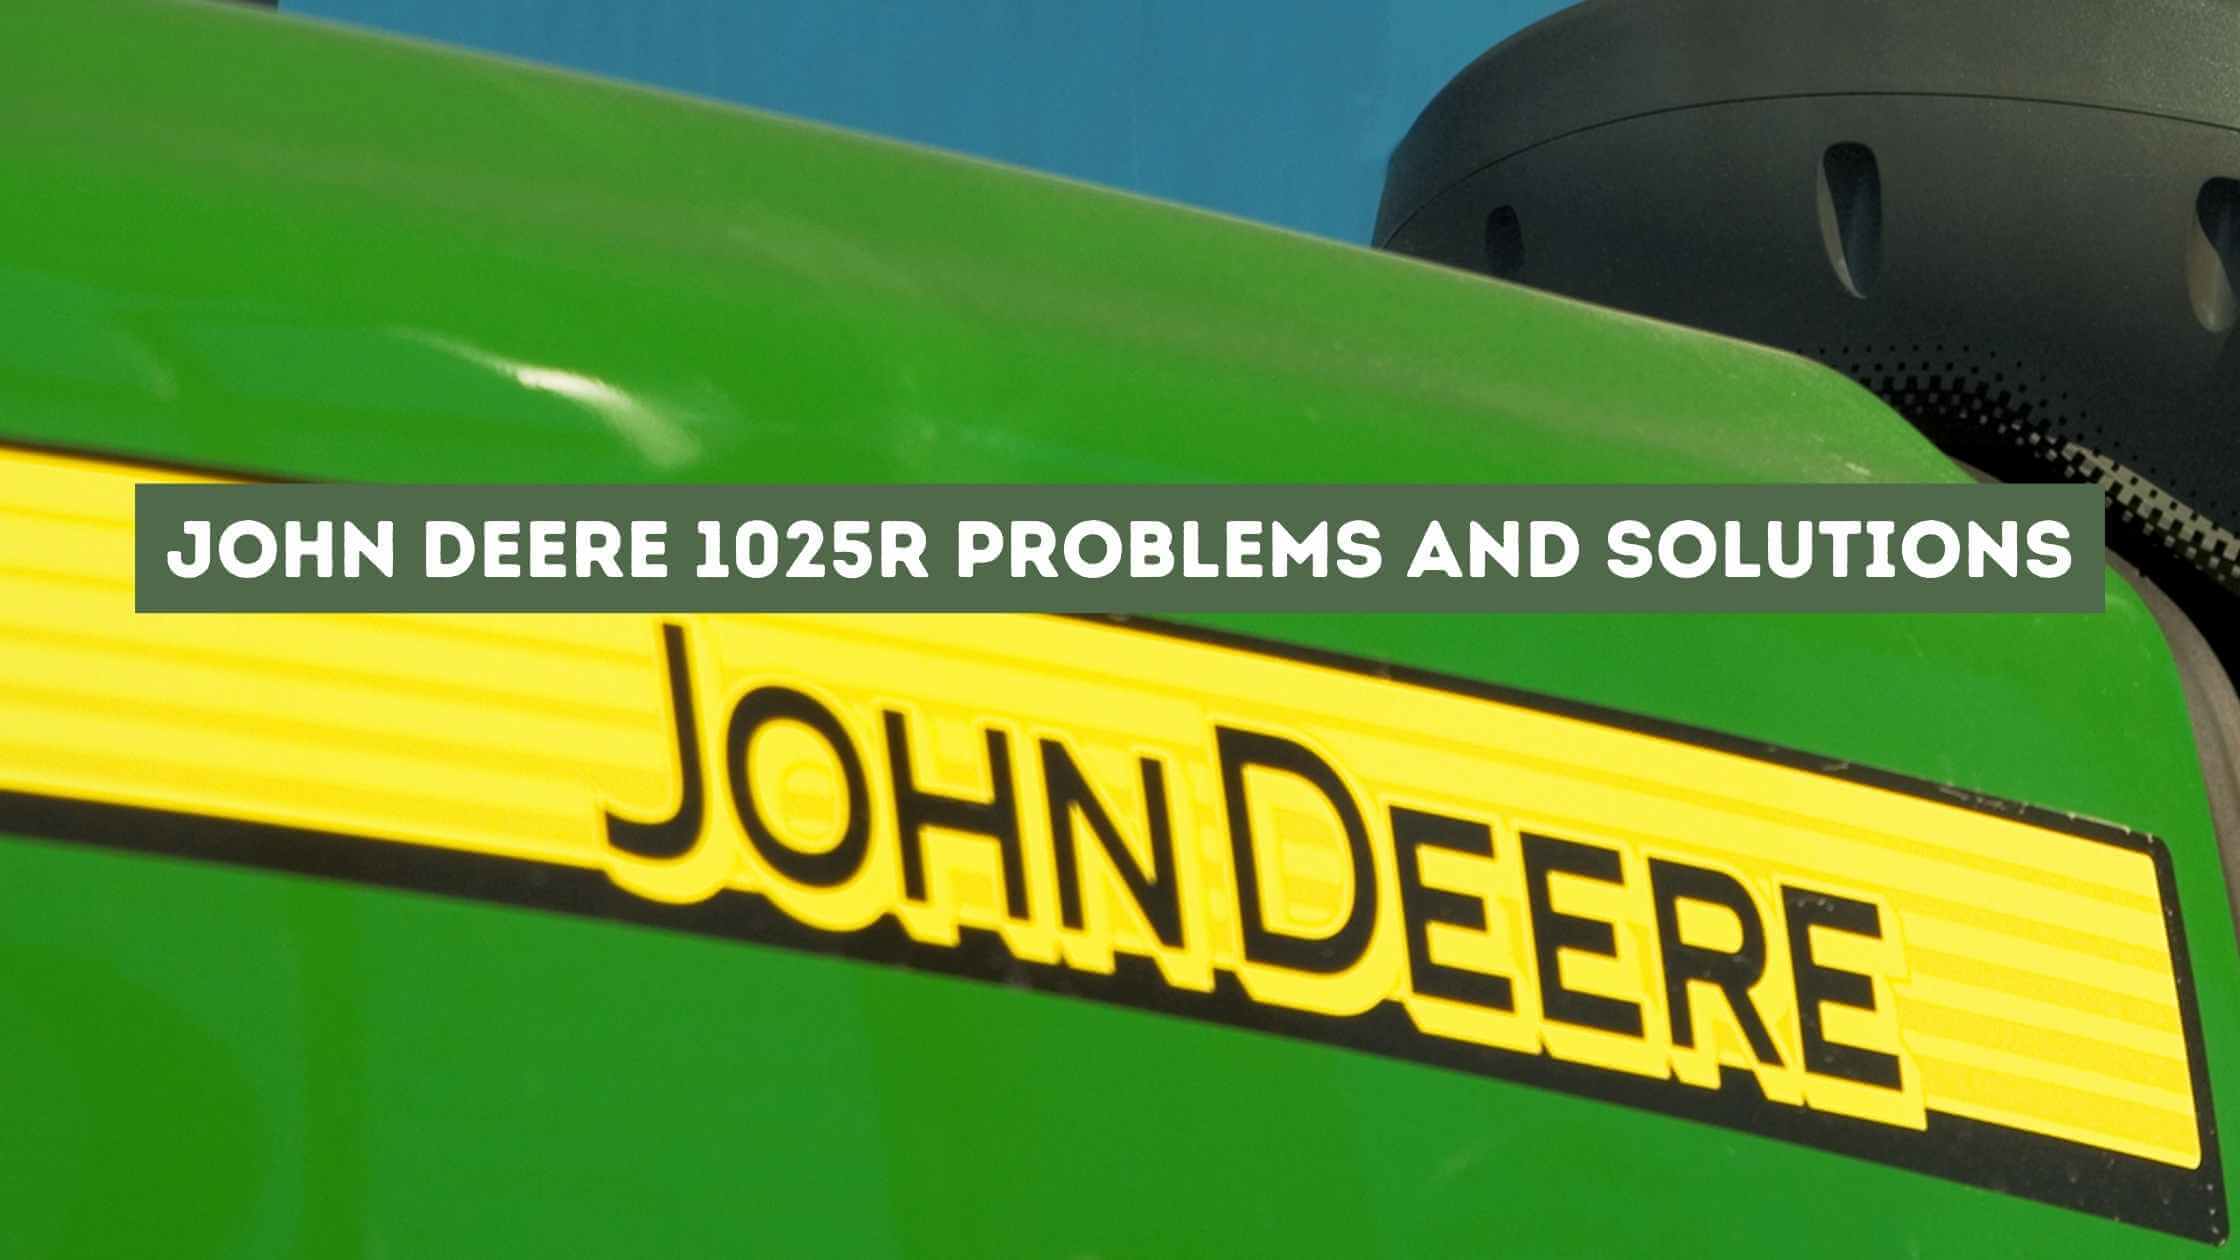 John Deere 1025R problems